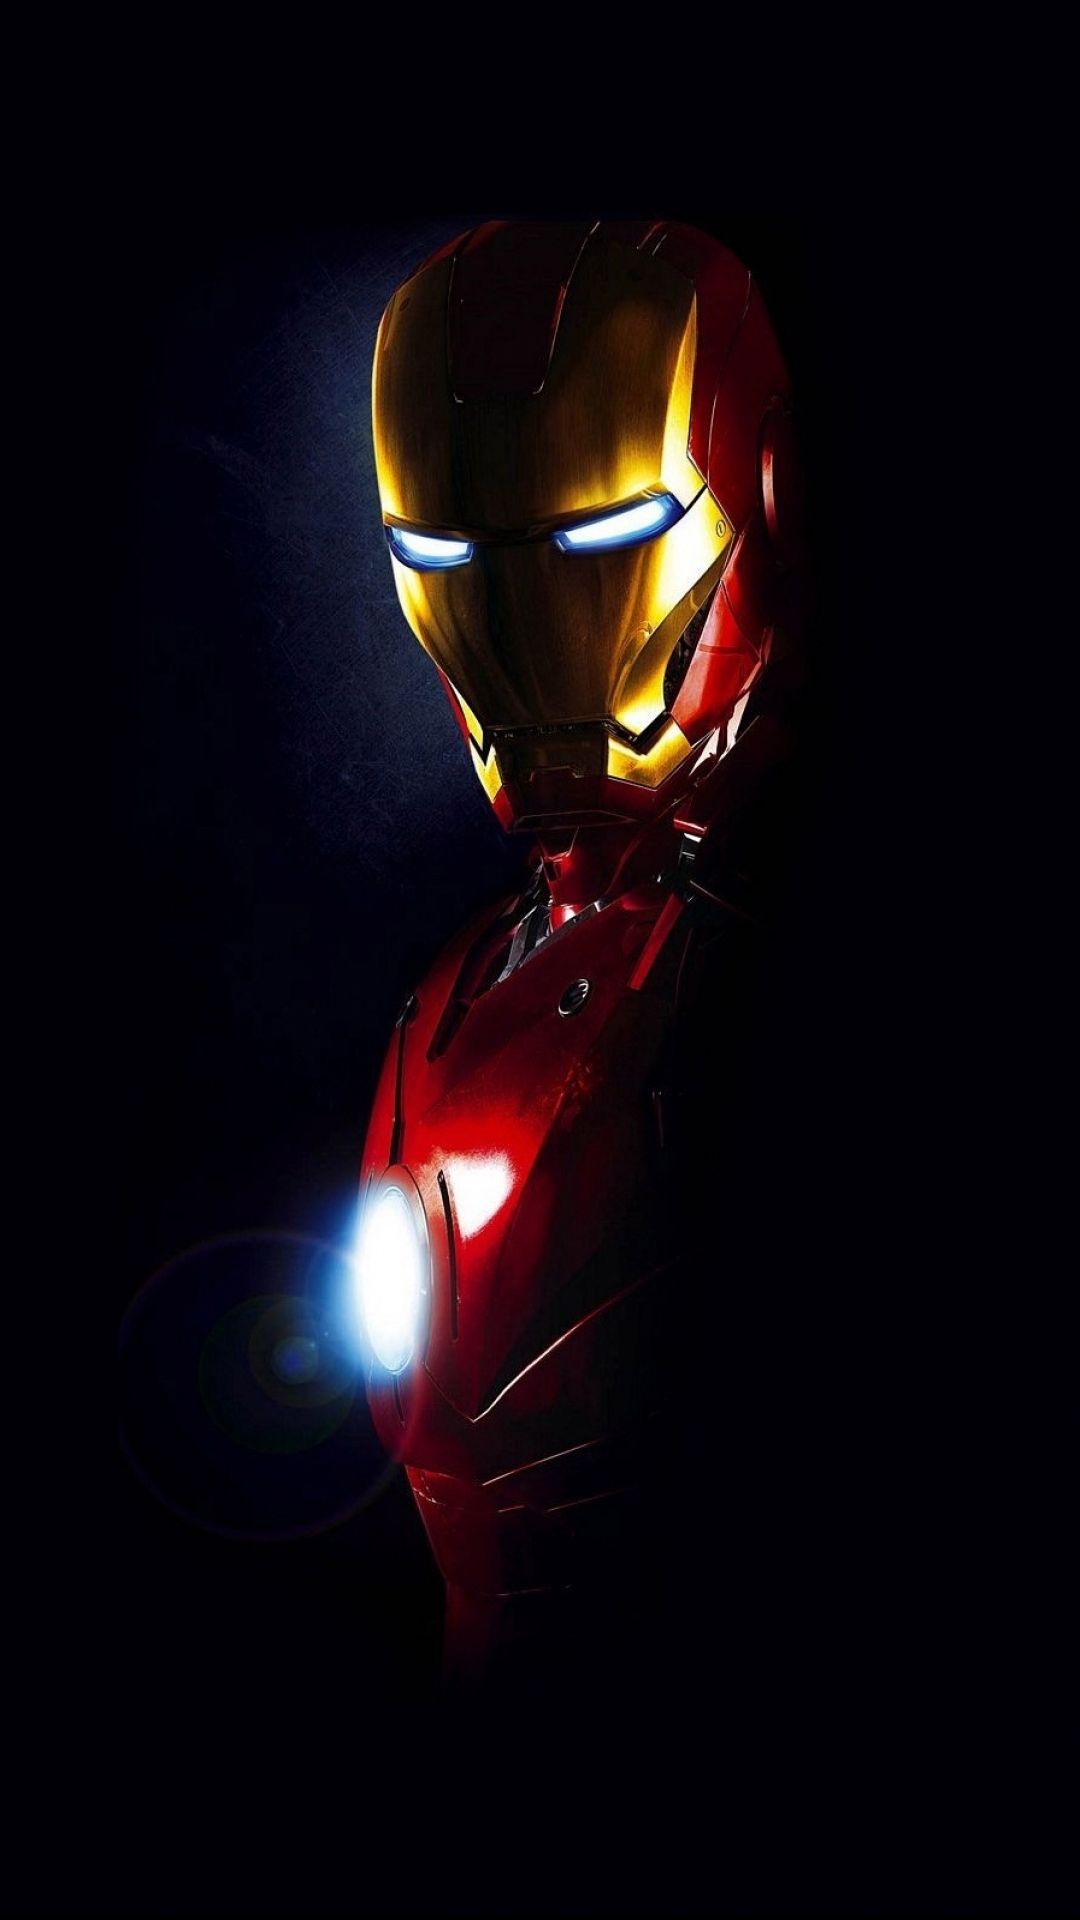 Iron Man Avengers 4 Wallpaper 4k Ultra HD ID7099